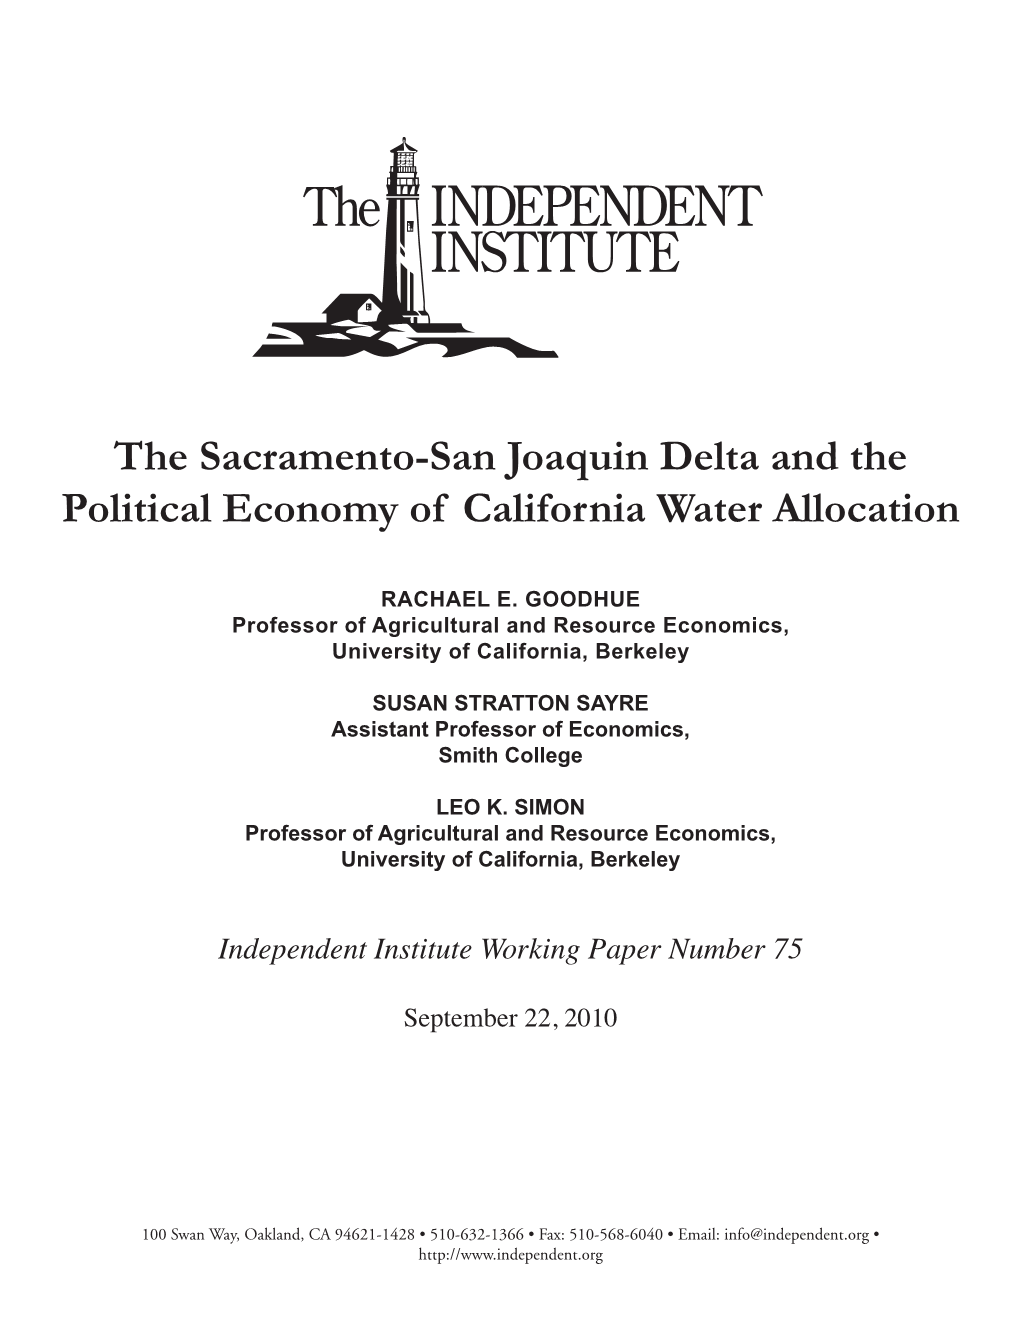 The Sacramento-San Joaquin Delta and the Political Economy of California Water Allocation